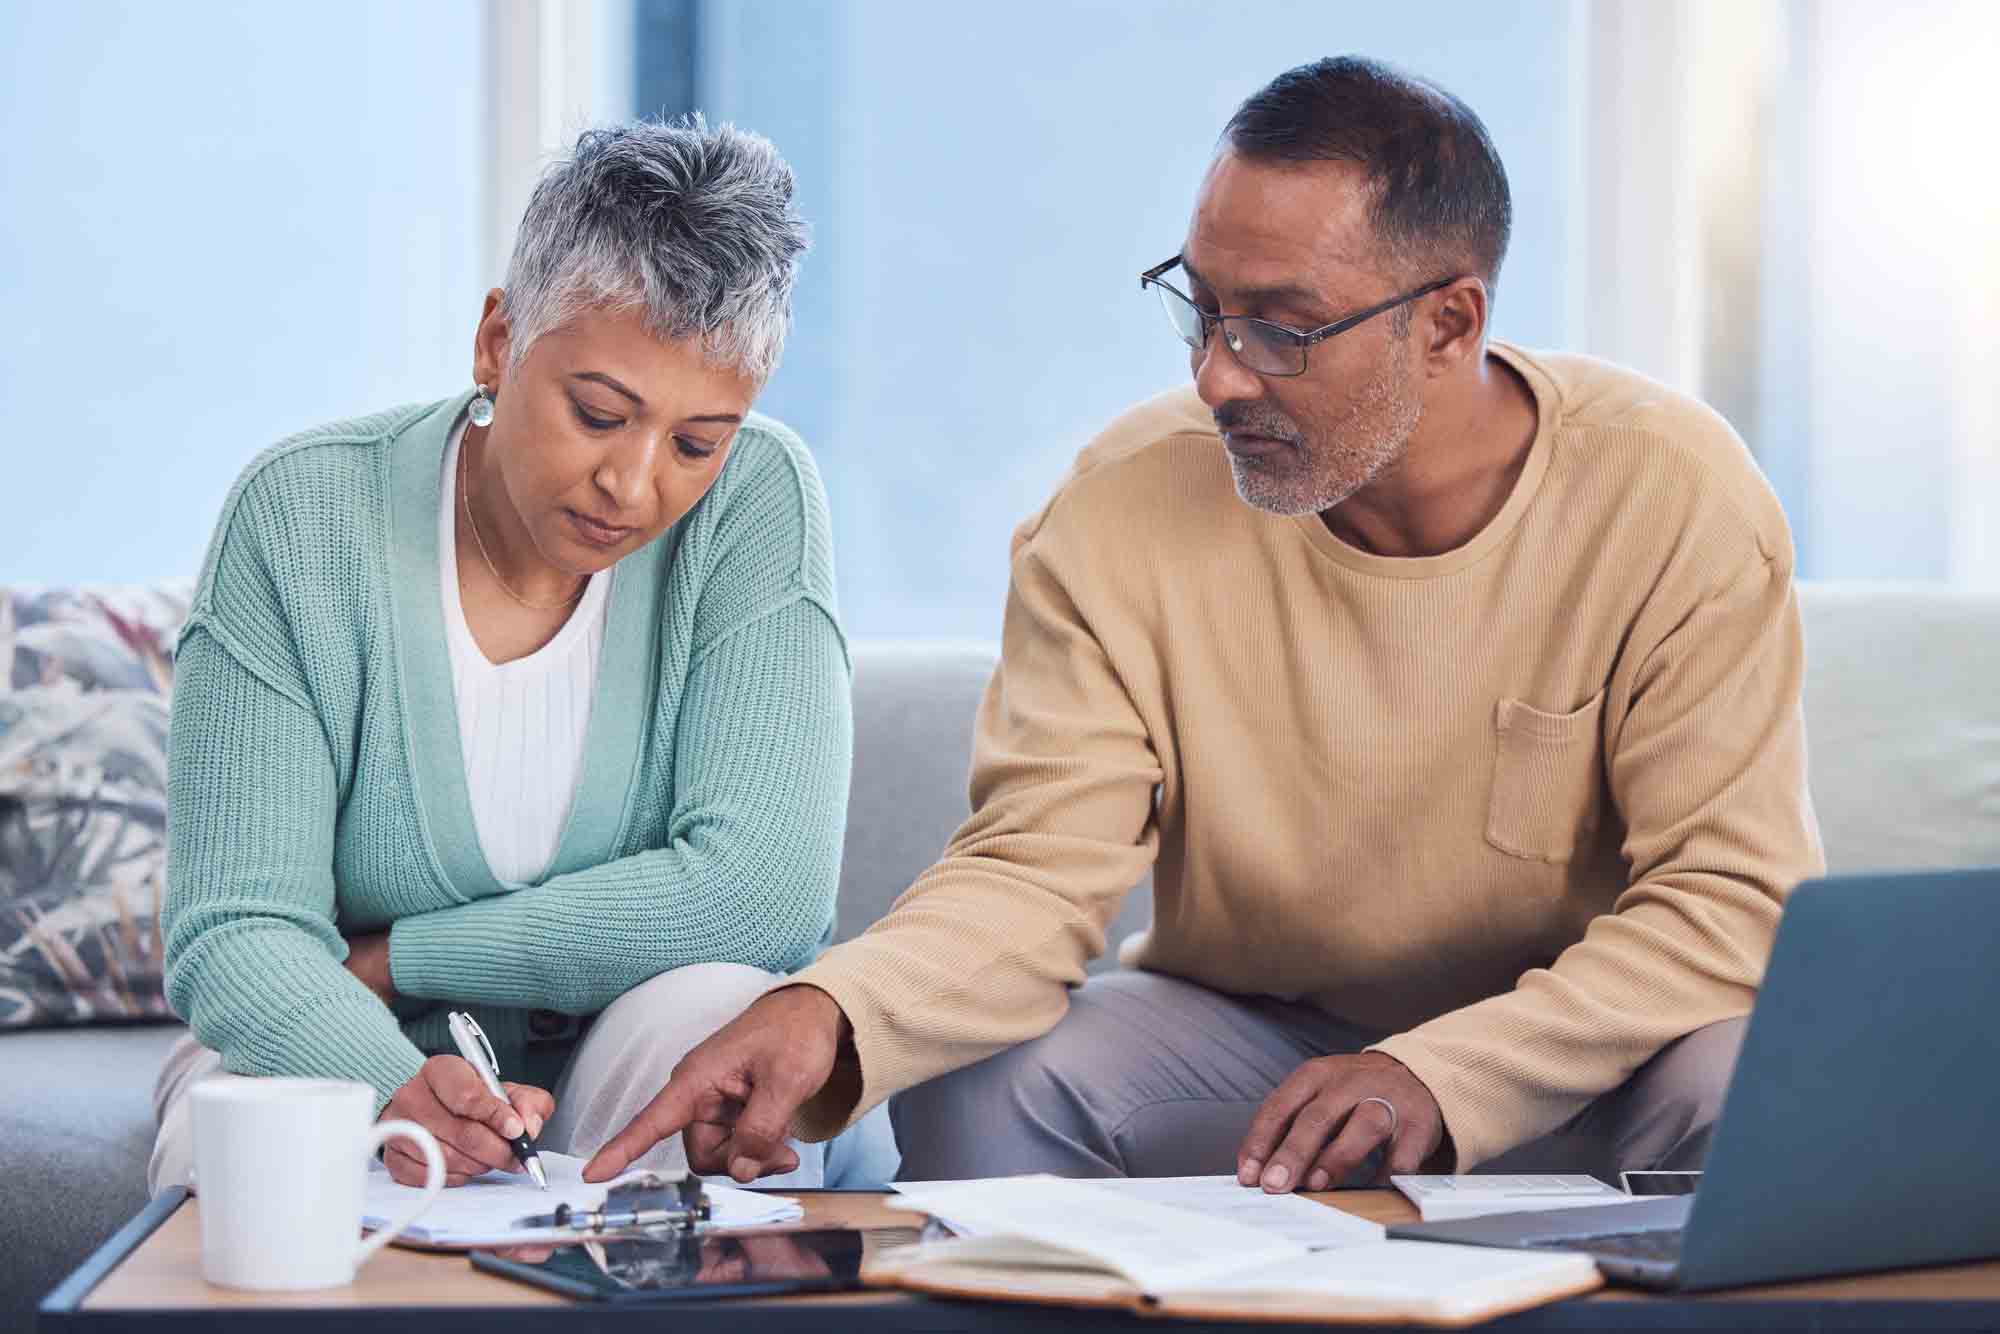 Choosing a Retirement Planner